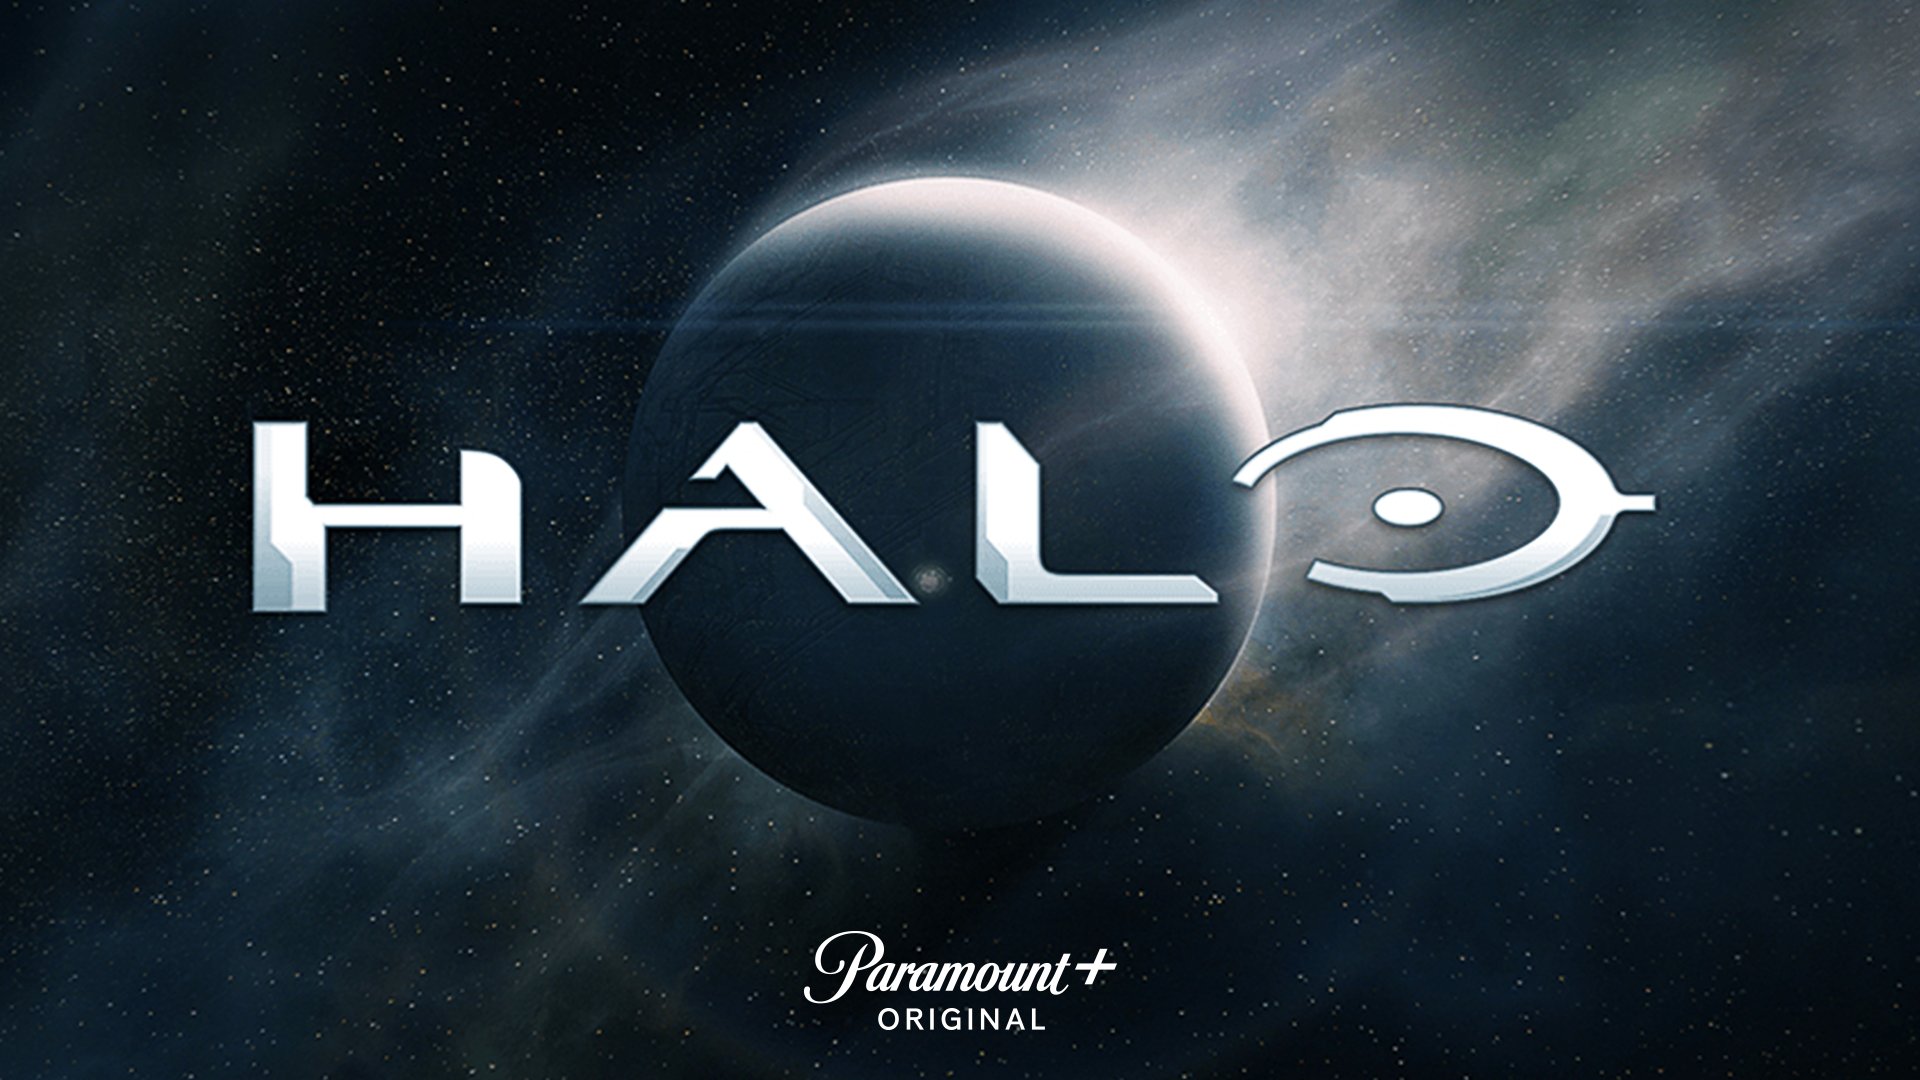 The Halo Season 2 trailer makes the first season look like a pilot